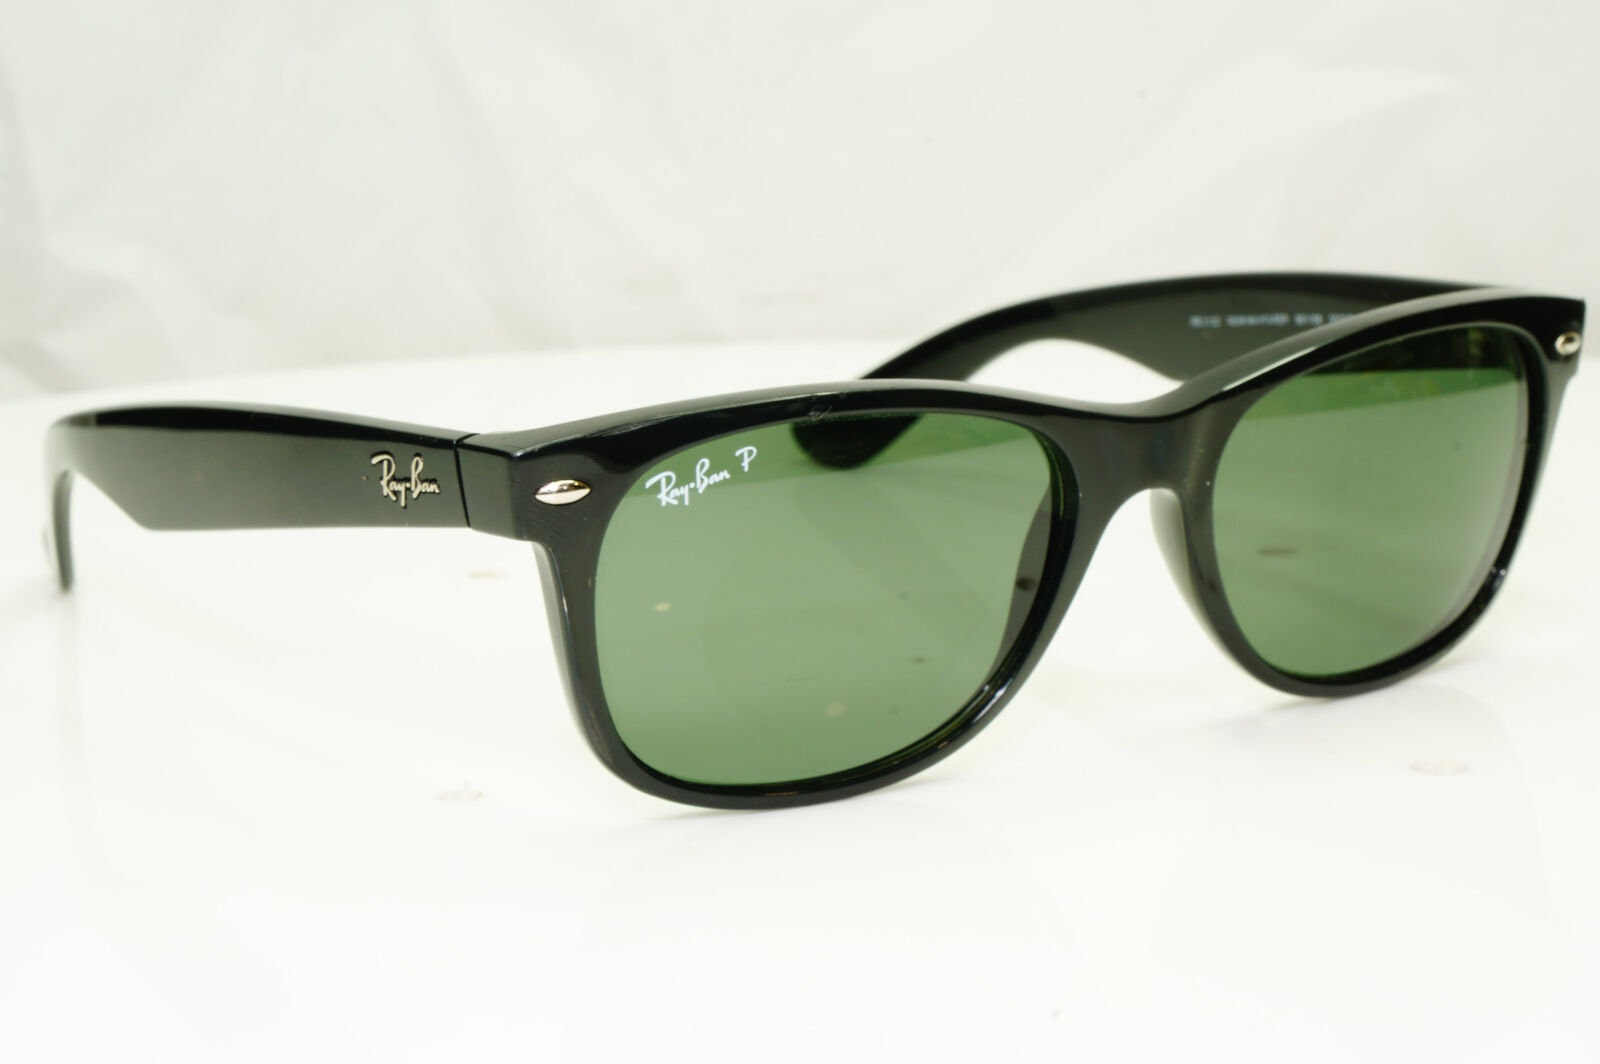 Authentic RayBan Polarized Sunglasses Rb 2132 New